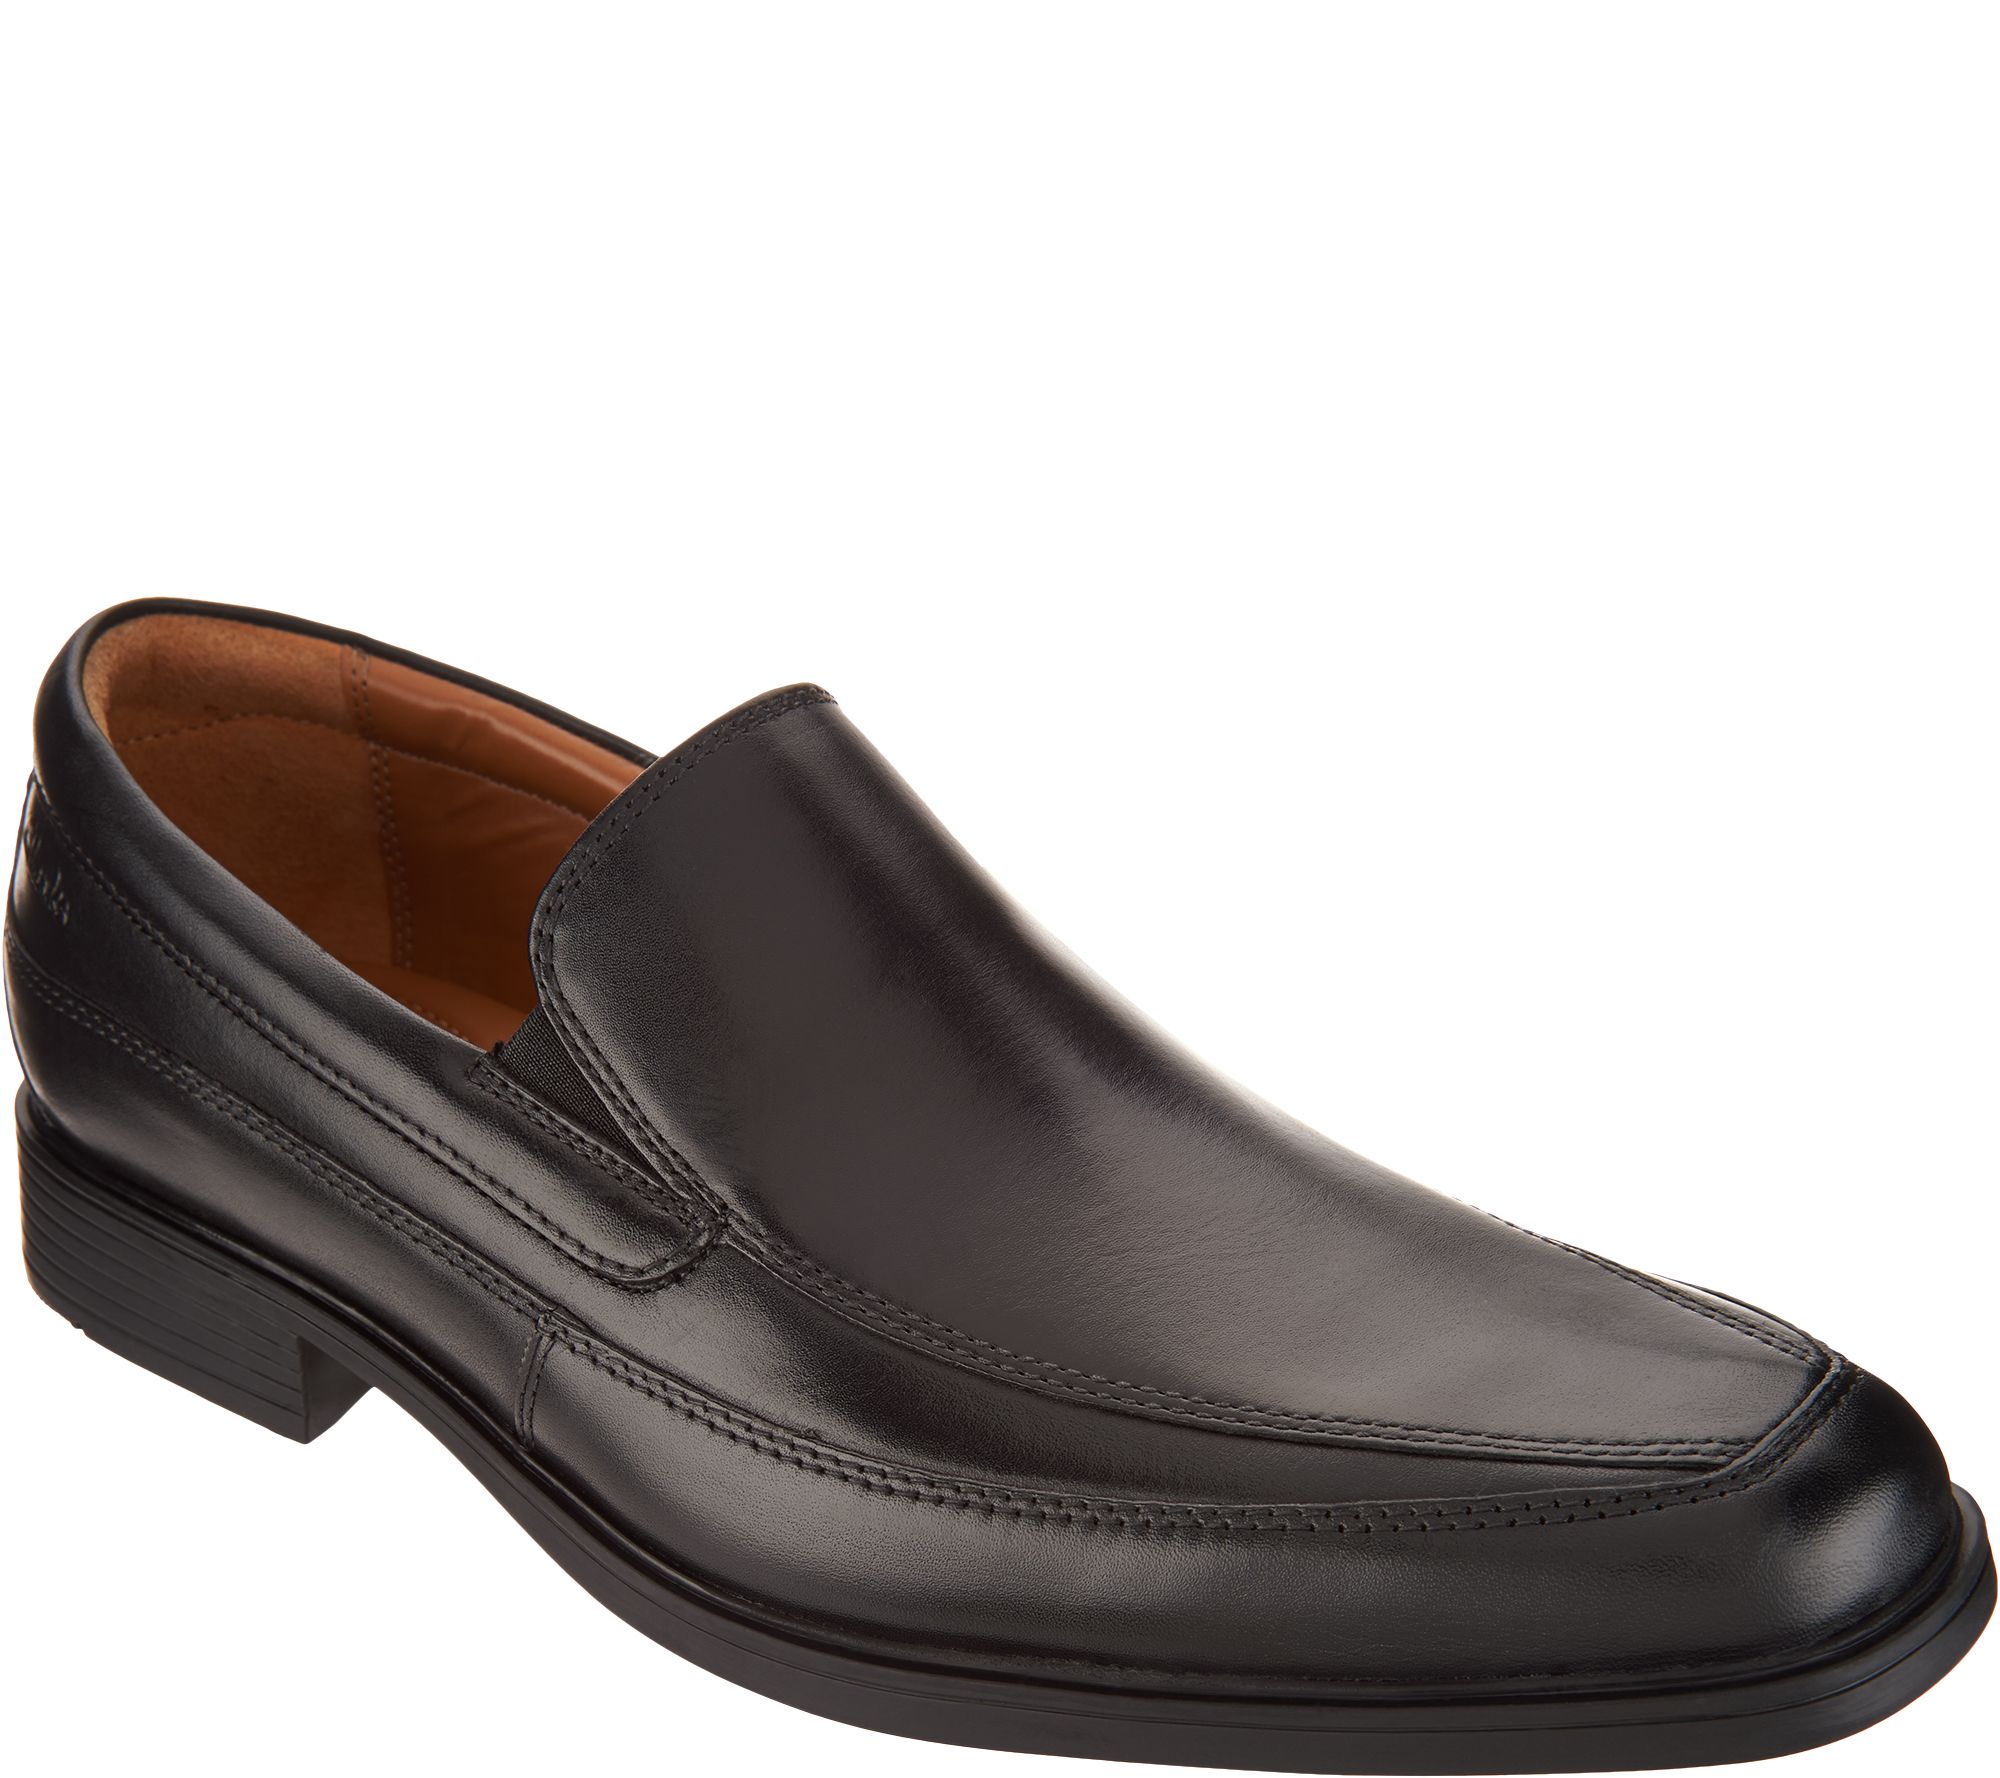 Clarks Men's Leather Loafers - Tilden Free - QVC.com